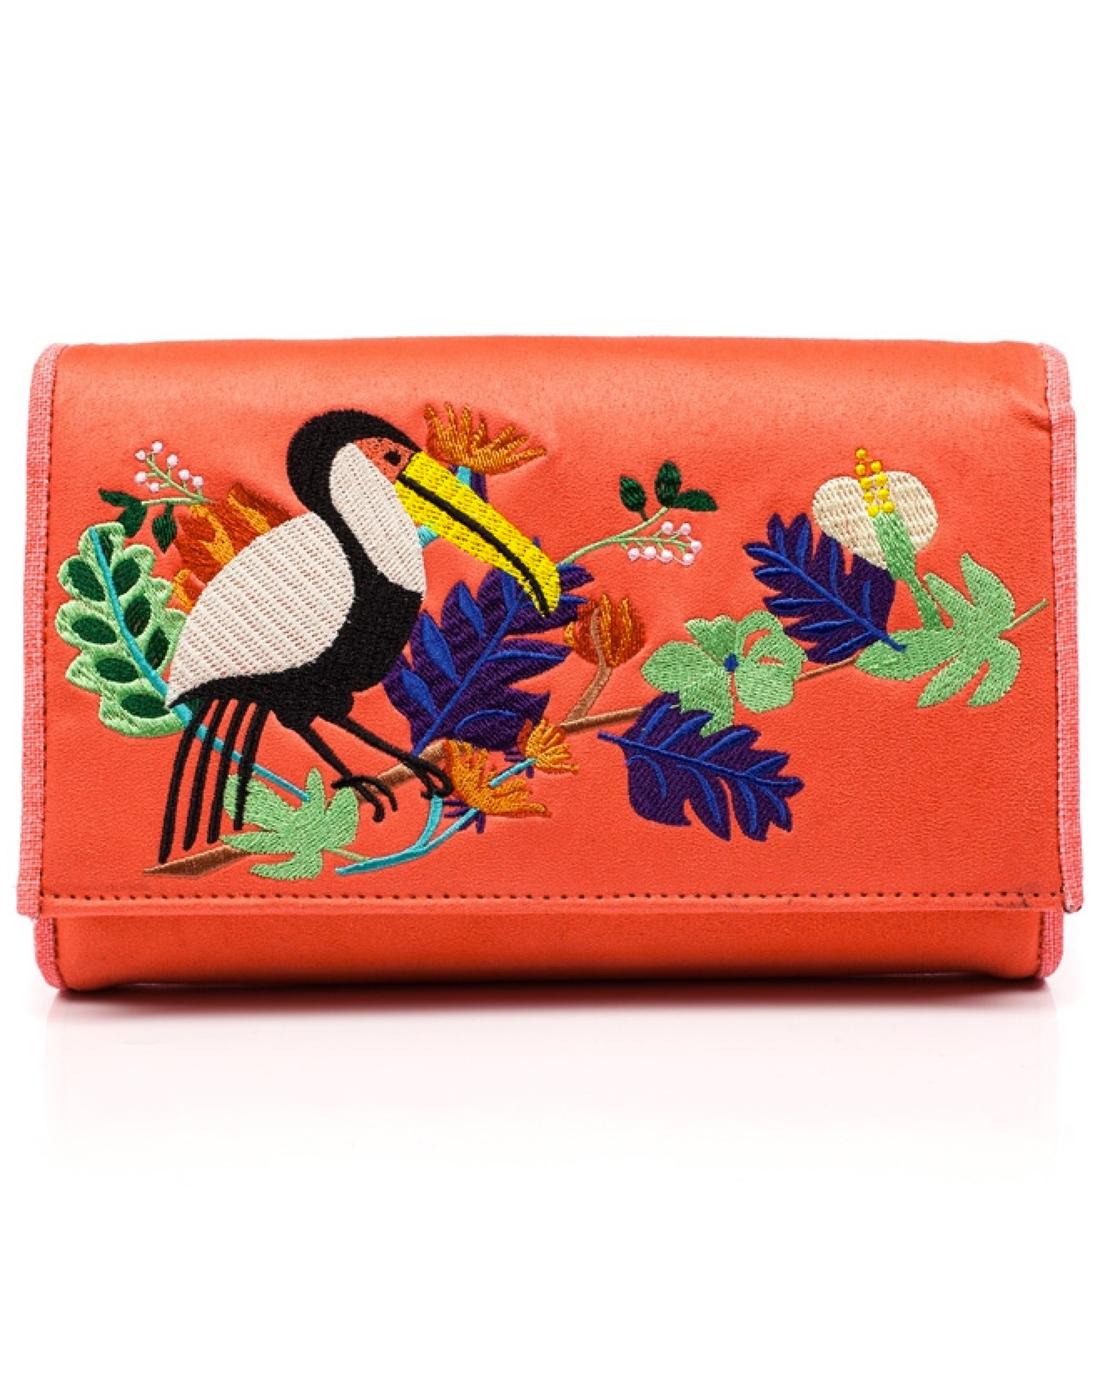 Birdy Beauty IRREGULAR CHOICE Travel Wallet (O)